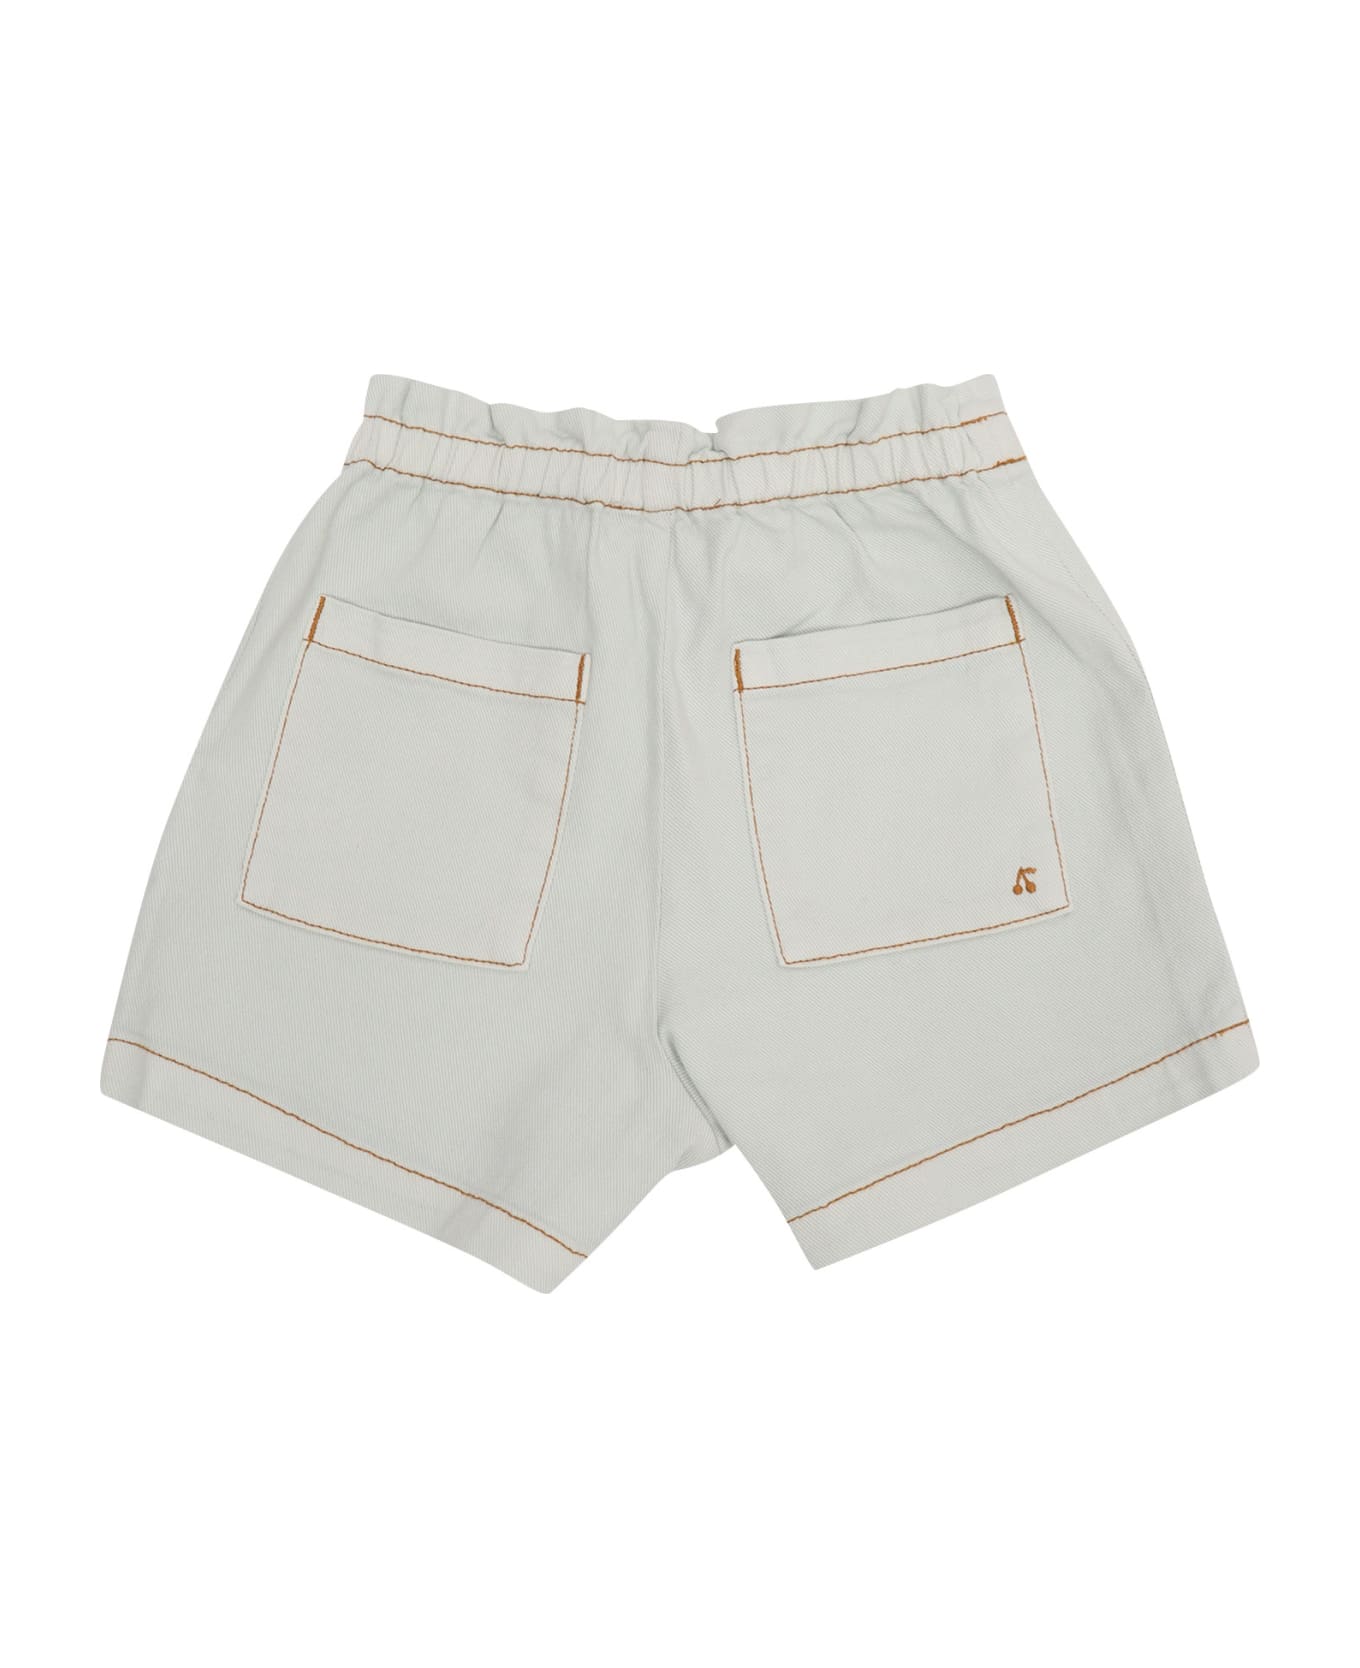 Bonpoint Cream Colored Shorts - PANNA